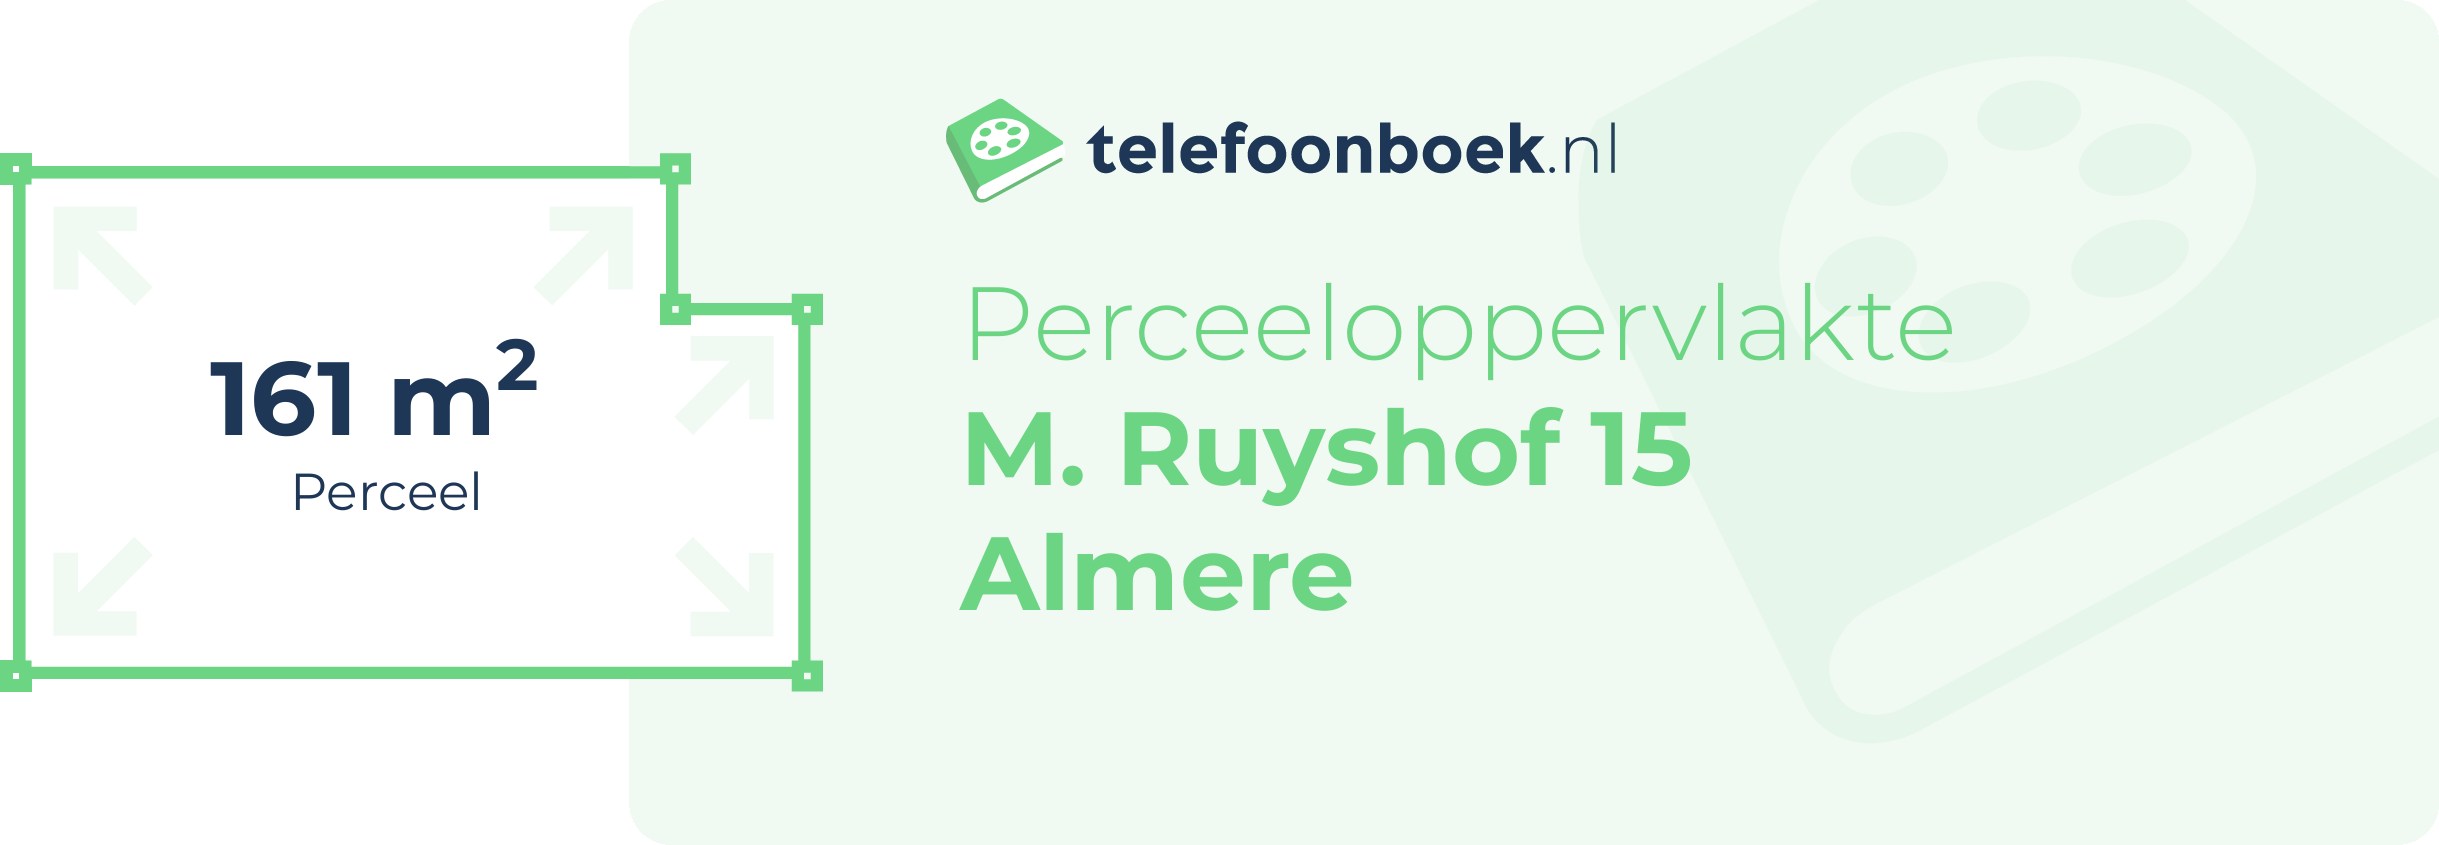 Perceeloppervlakte M. Ruyshof 15 Almere